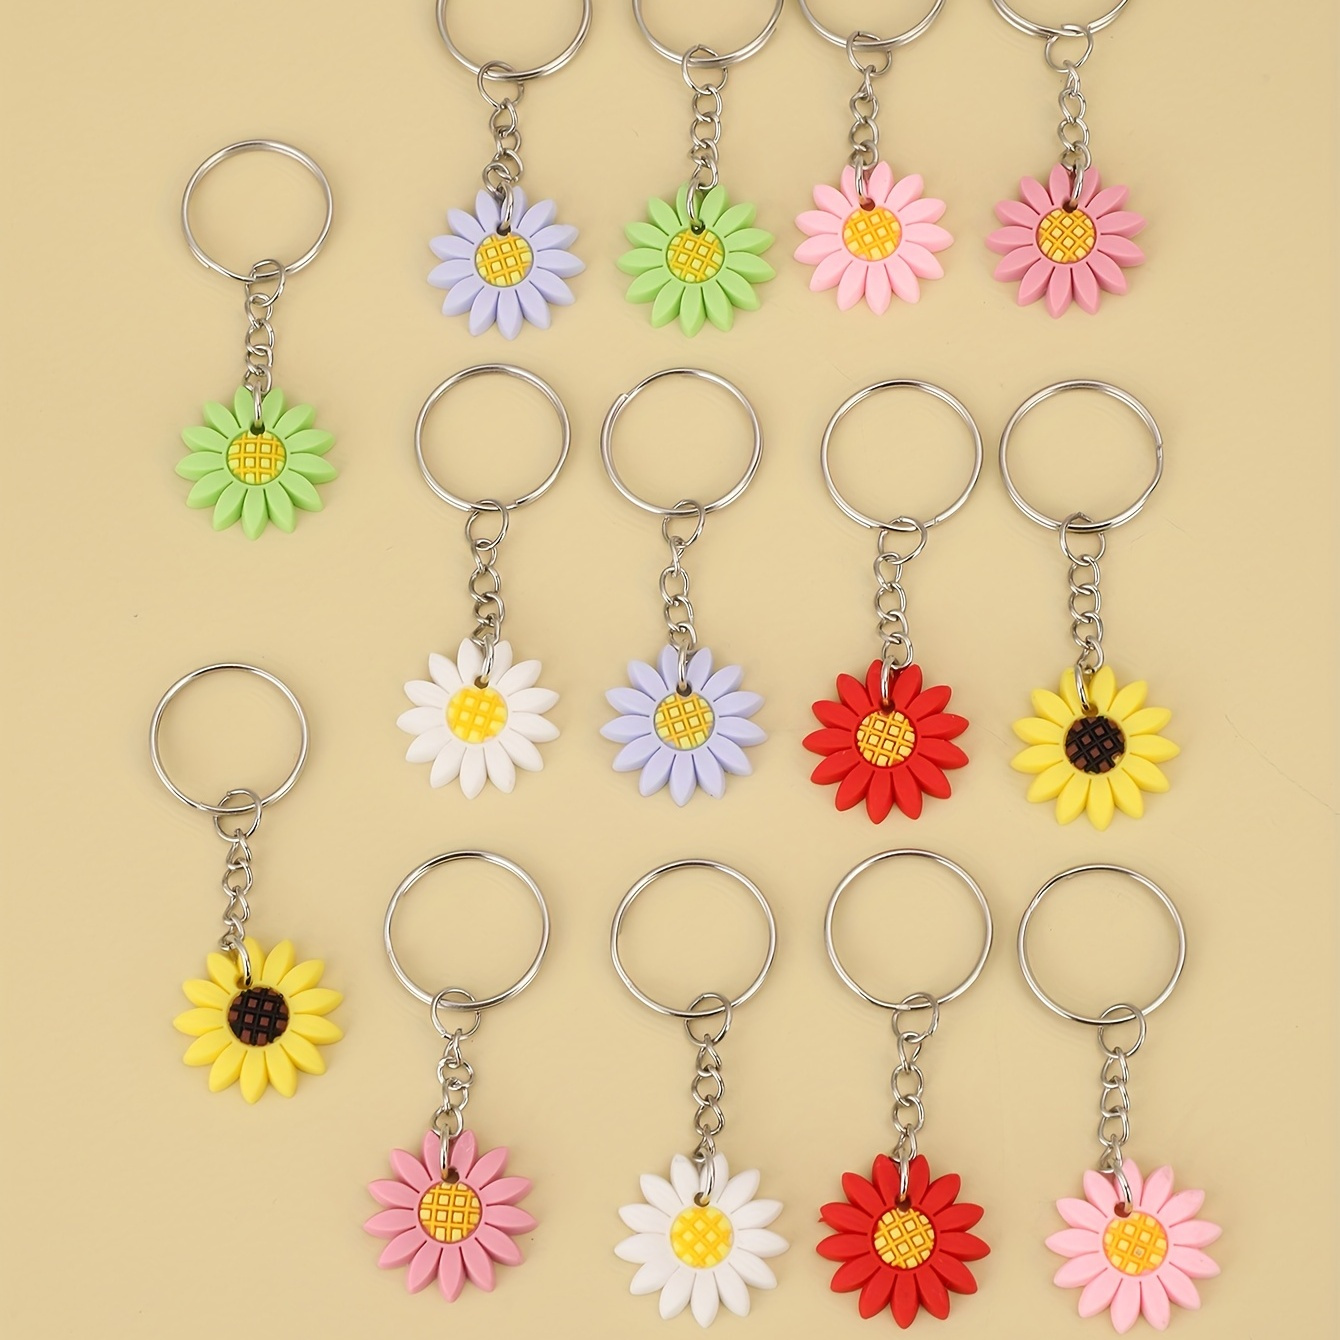 Flower Bag Charms Enameled Keychain for Women Girls 2Pcs Cute